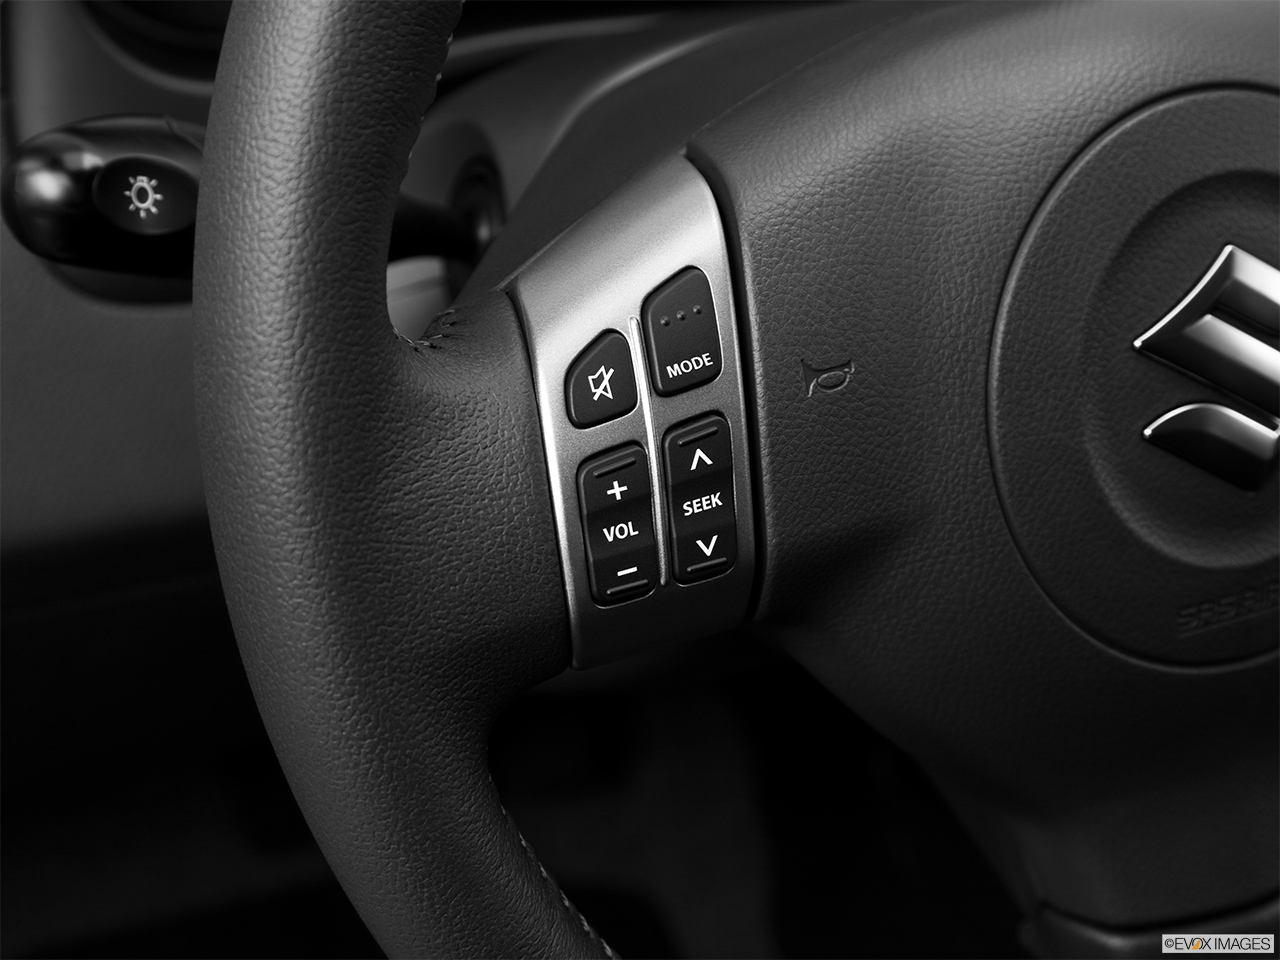 2013 Suzuki SX4 AWD Crossover Premium AT AWD Steering Wheel Controls (Left Side) 